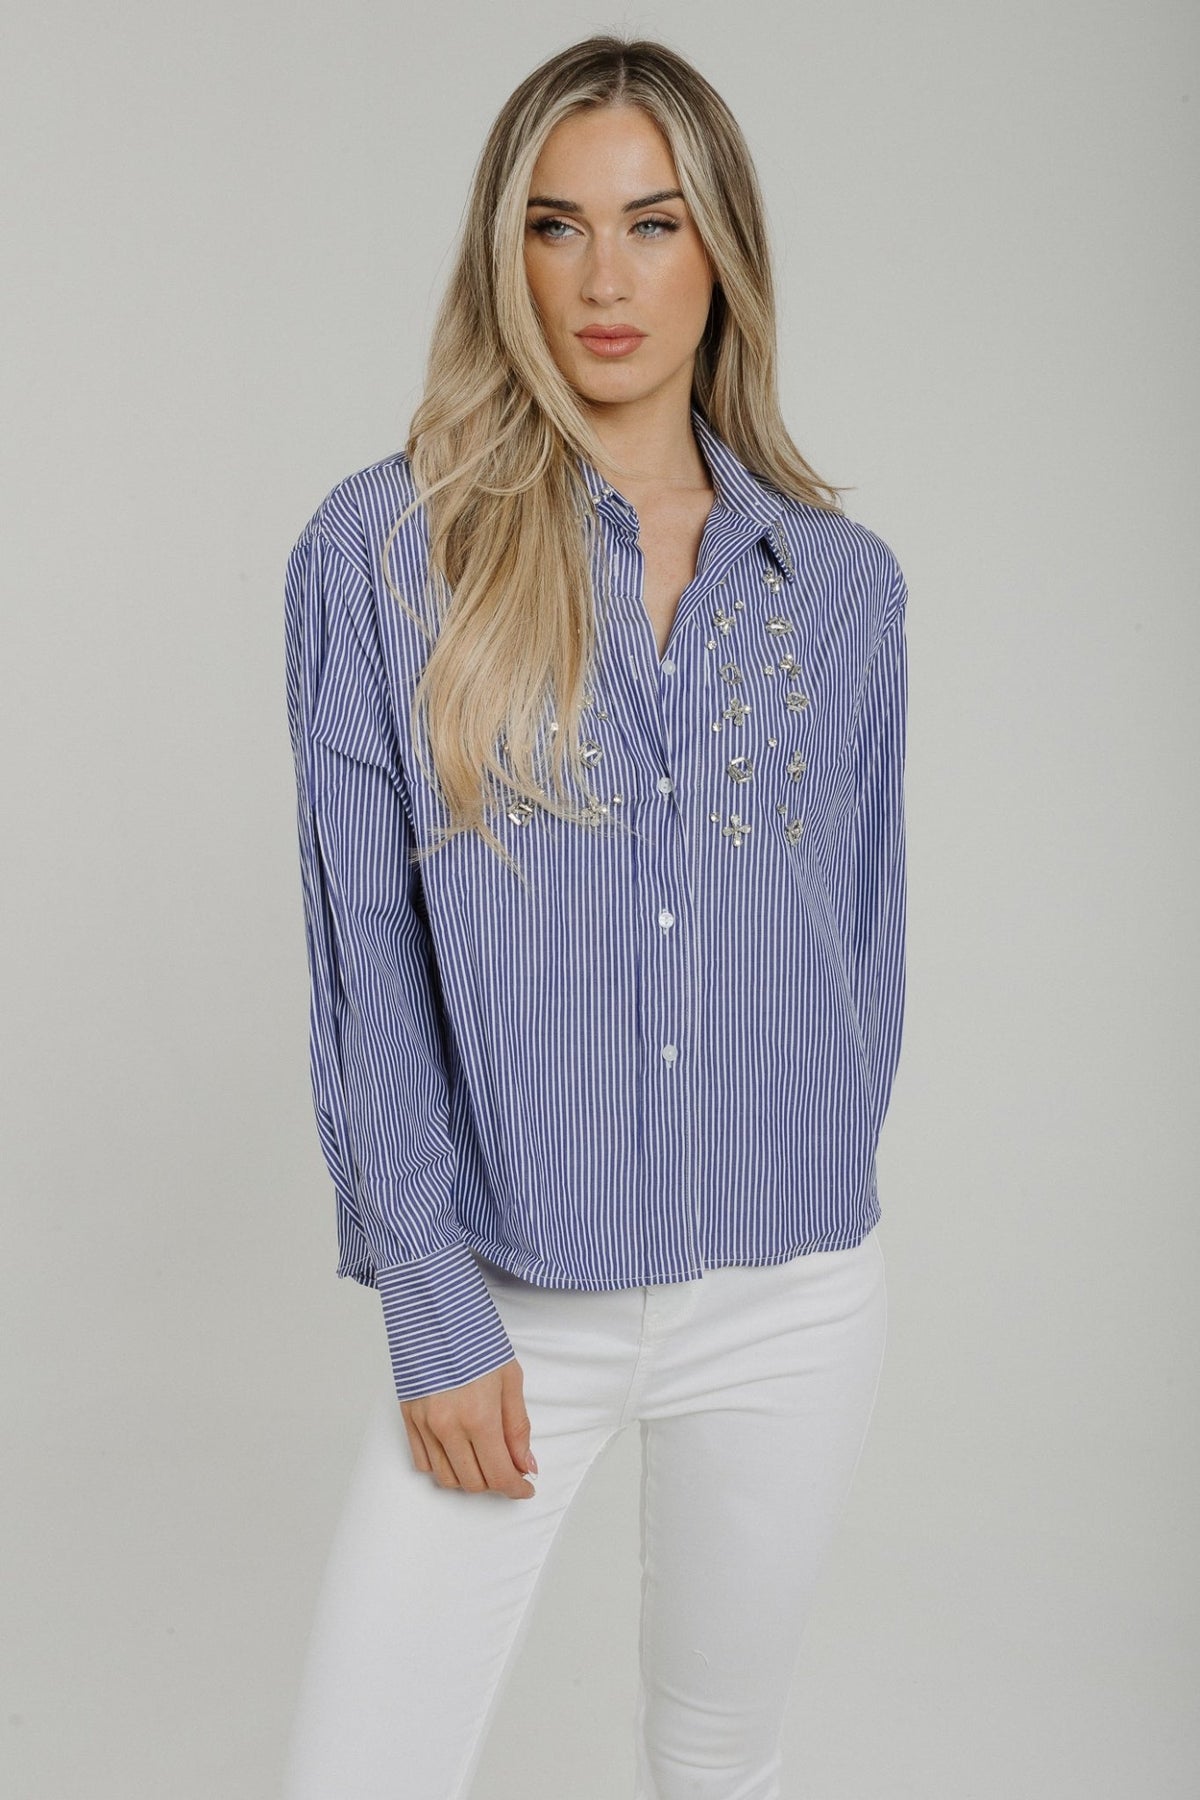 Holly Embellished Shirt In Blue Stripe - The Walk in Wardrobe